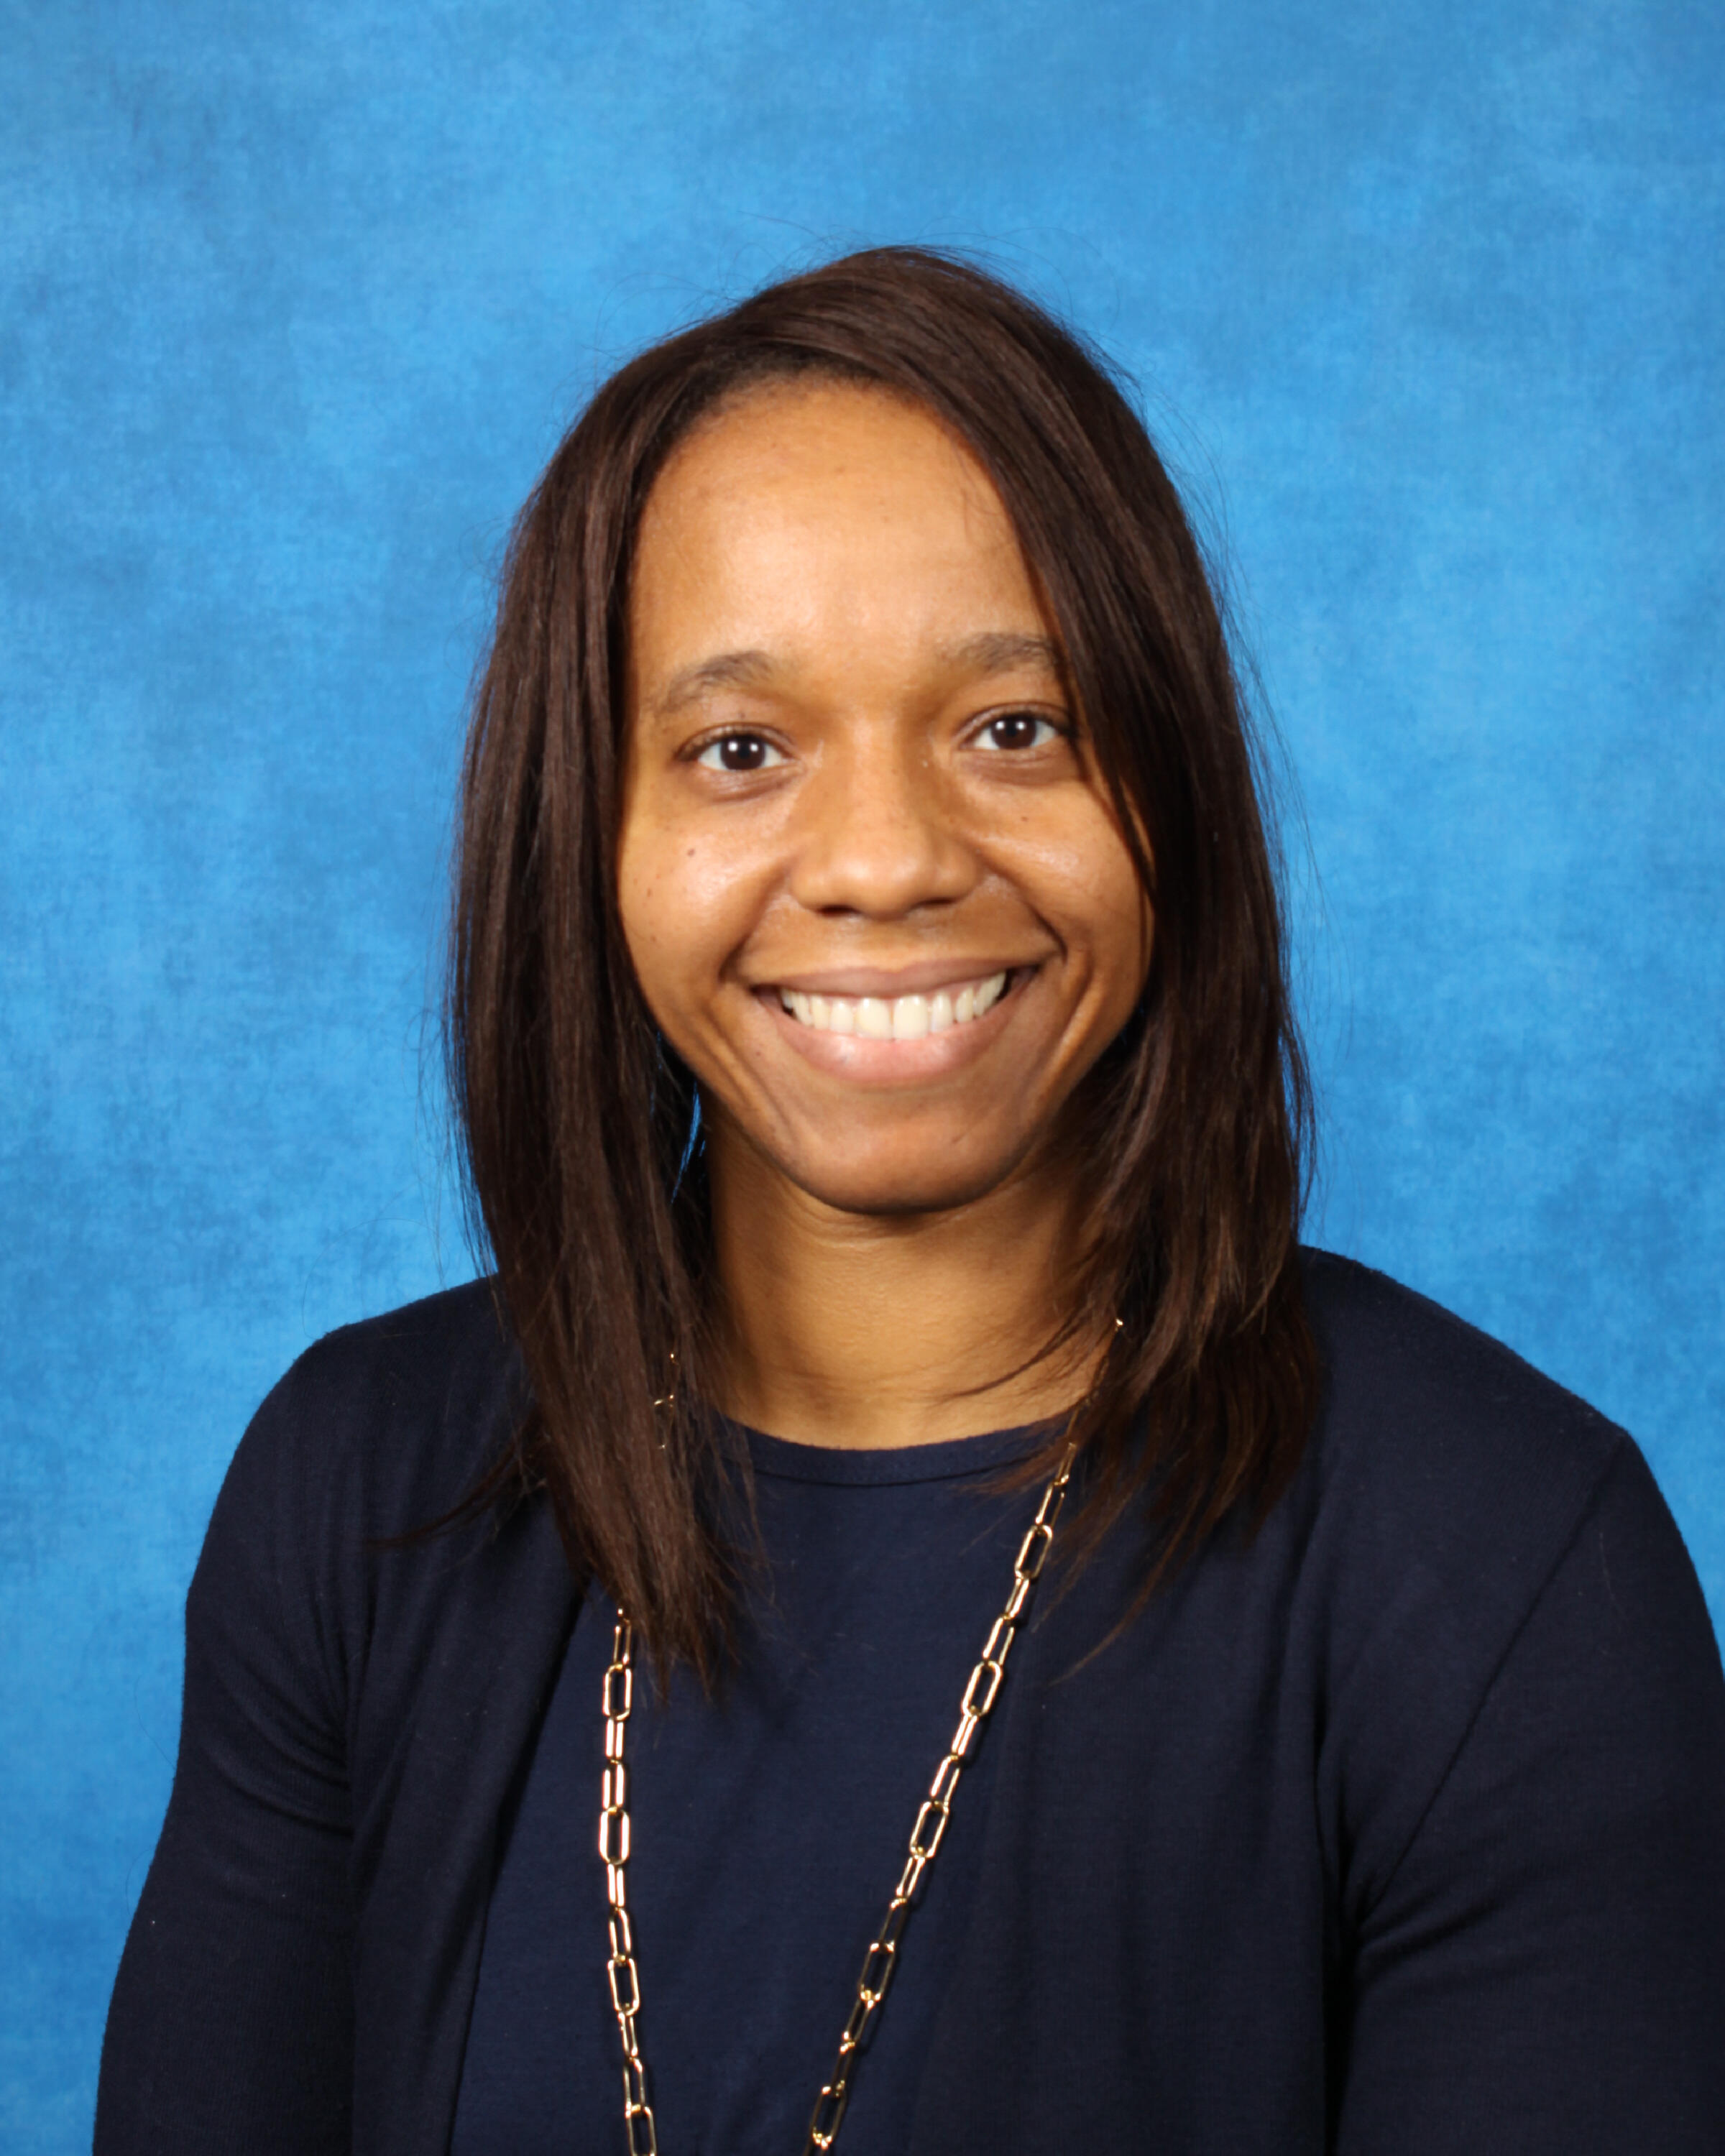 Dr. Salethia James - Principal of Statham Elementary School